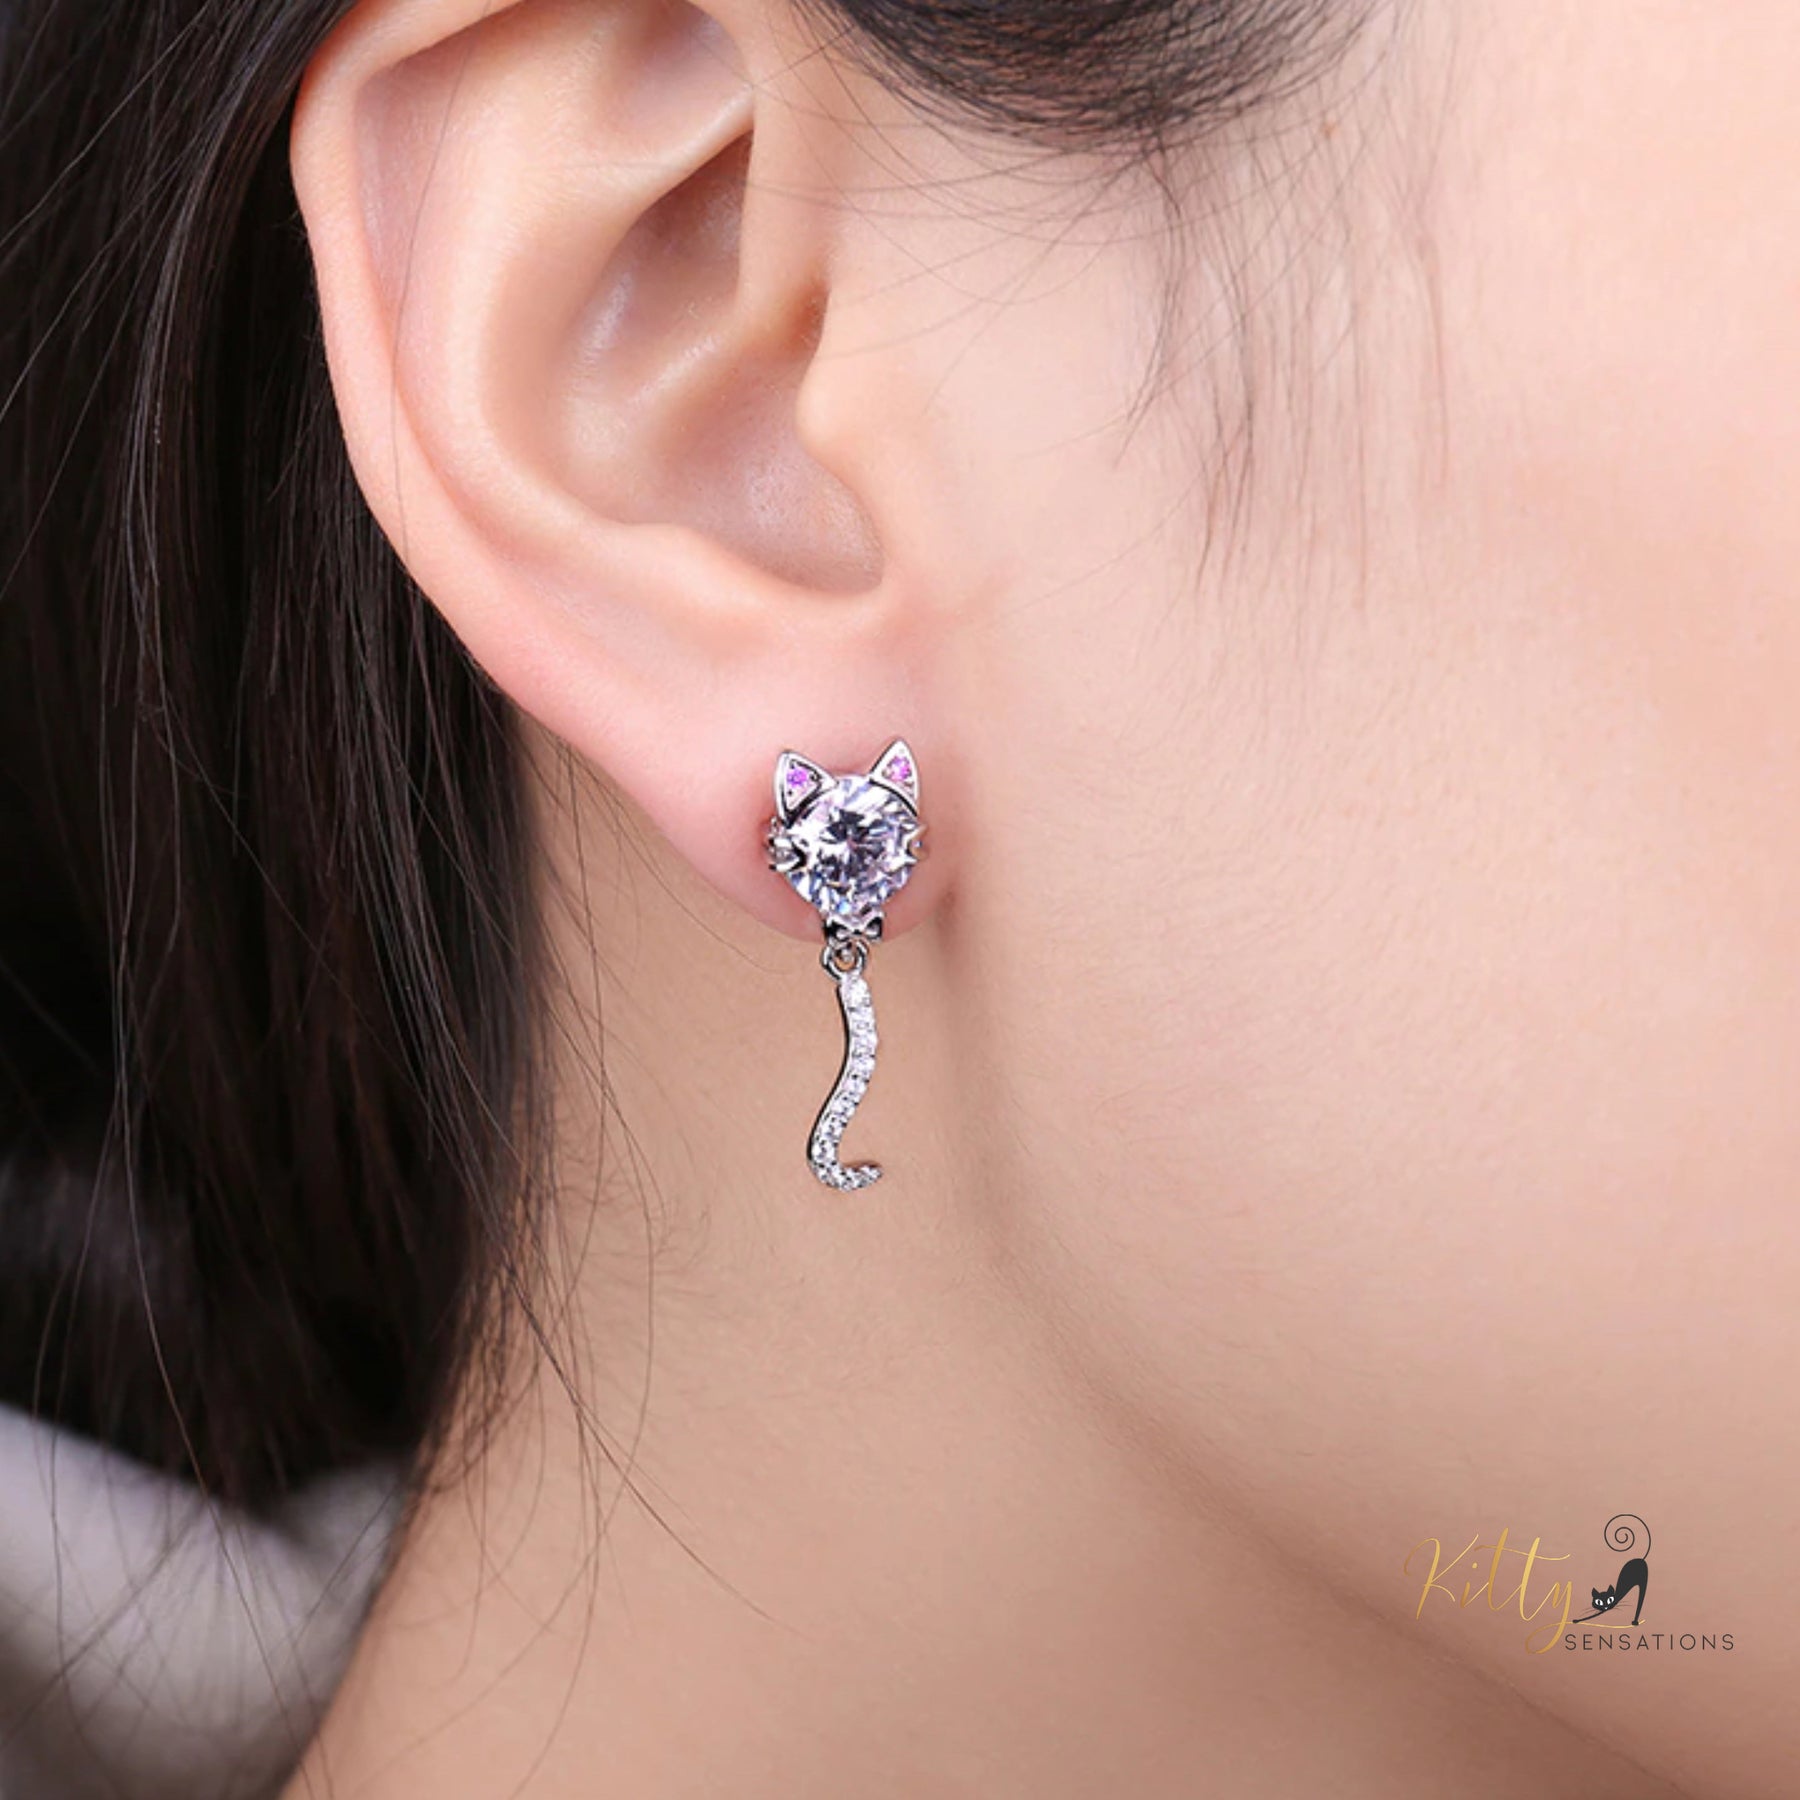 www.KittySensations.com:  Classy Sparkling CZ Kitty Earrings (Fine Jewelry) in Solid 925 Sterling Silver ($83.69): https://www.kittysensations.com/products/classy-sparkling-cz-kitty-earrings-fine-jewelry-in-solid-sterling-silver